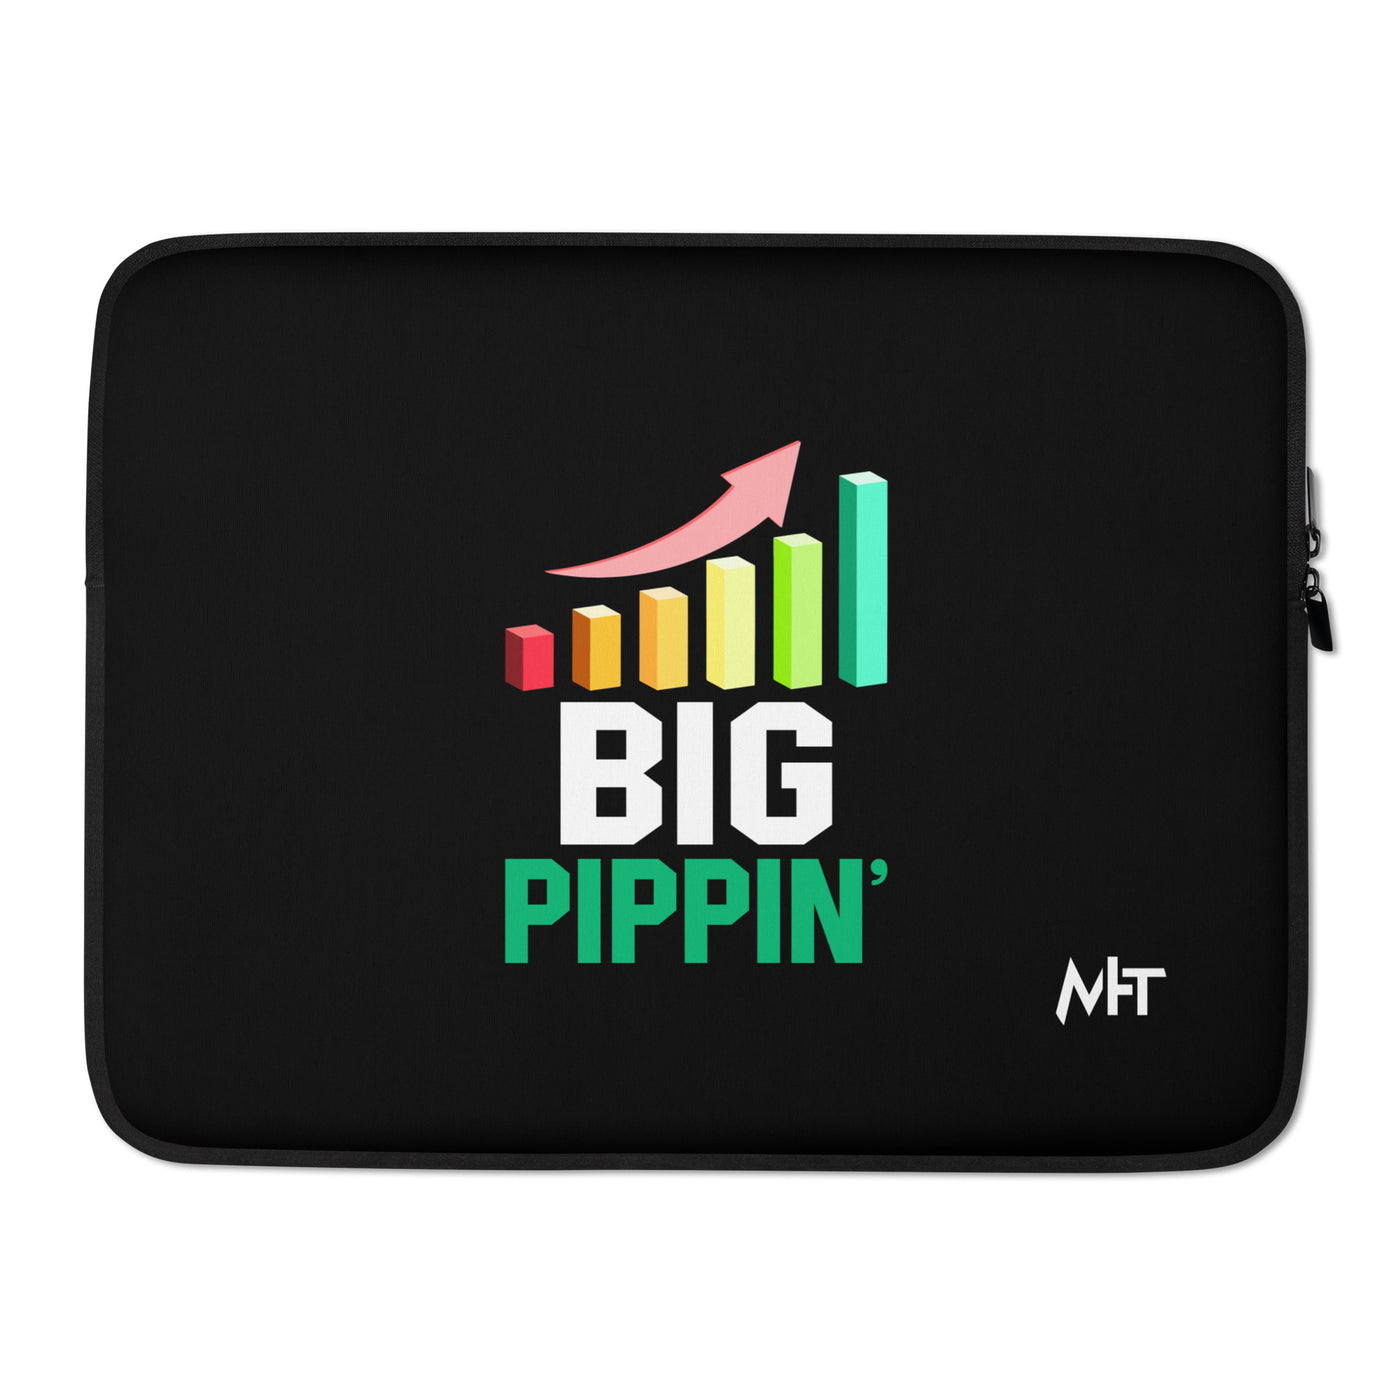 Big Pippin' - Laptop Sleeve